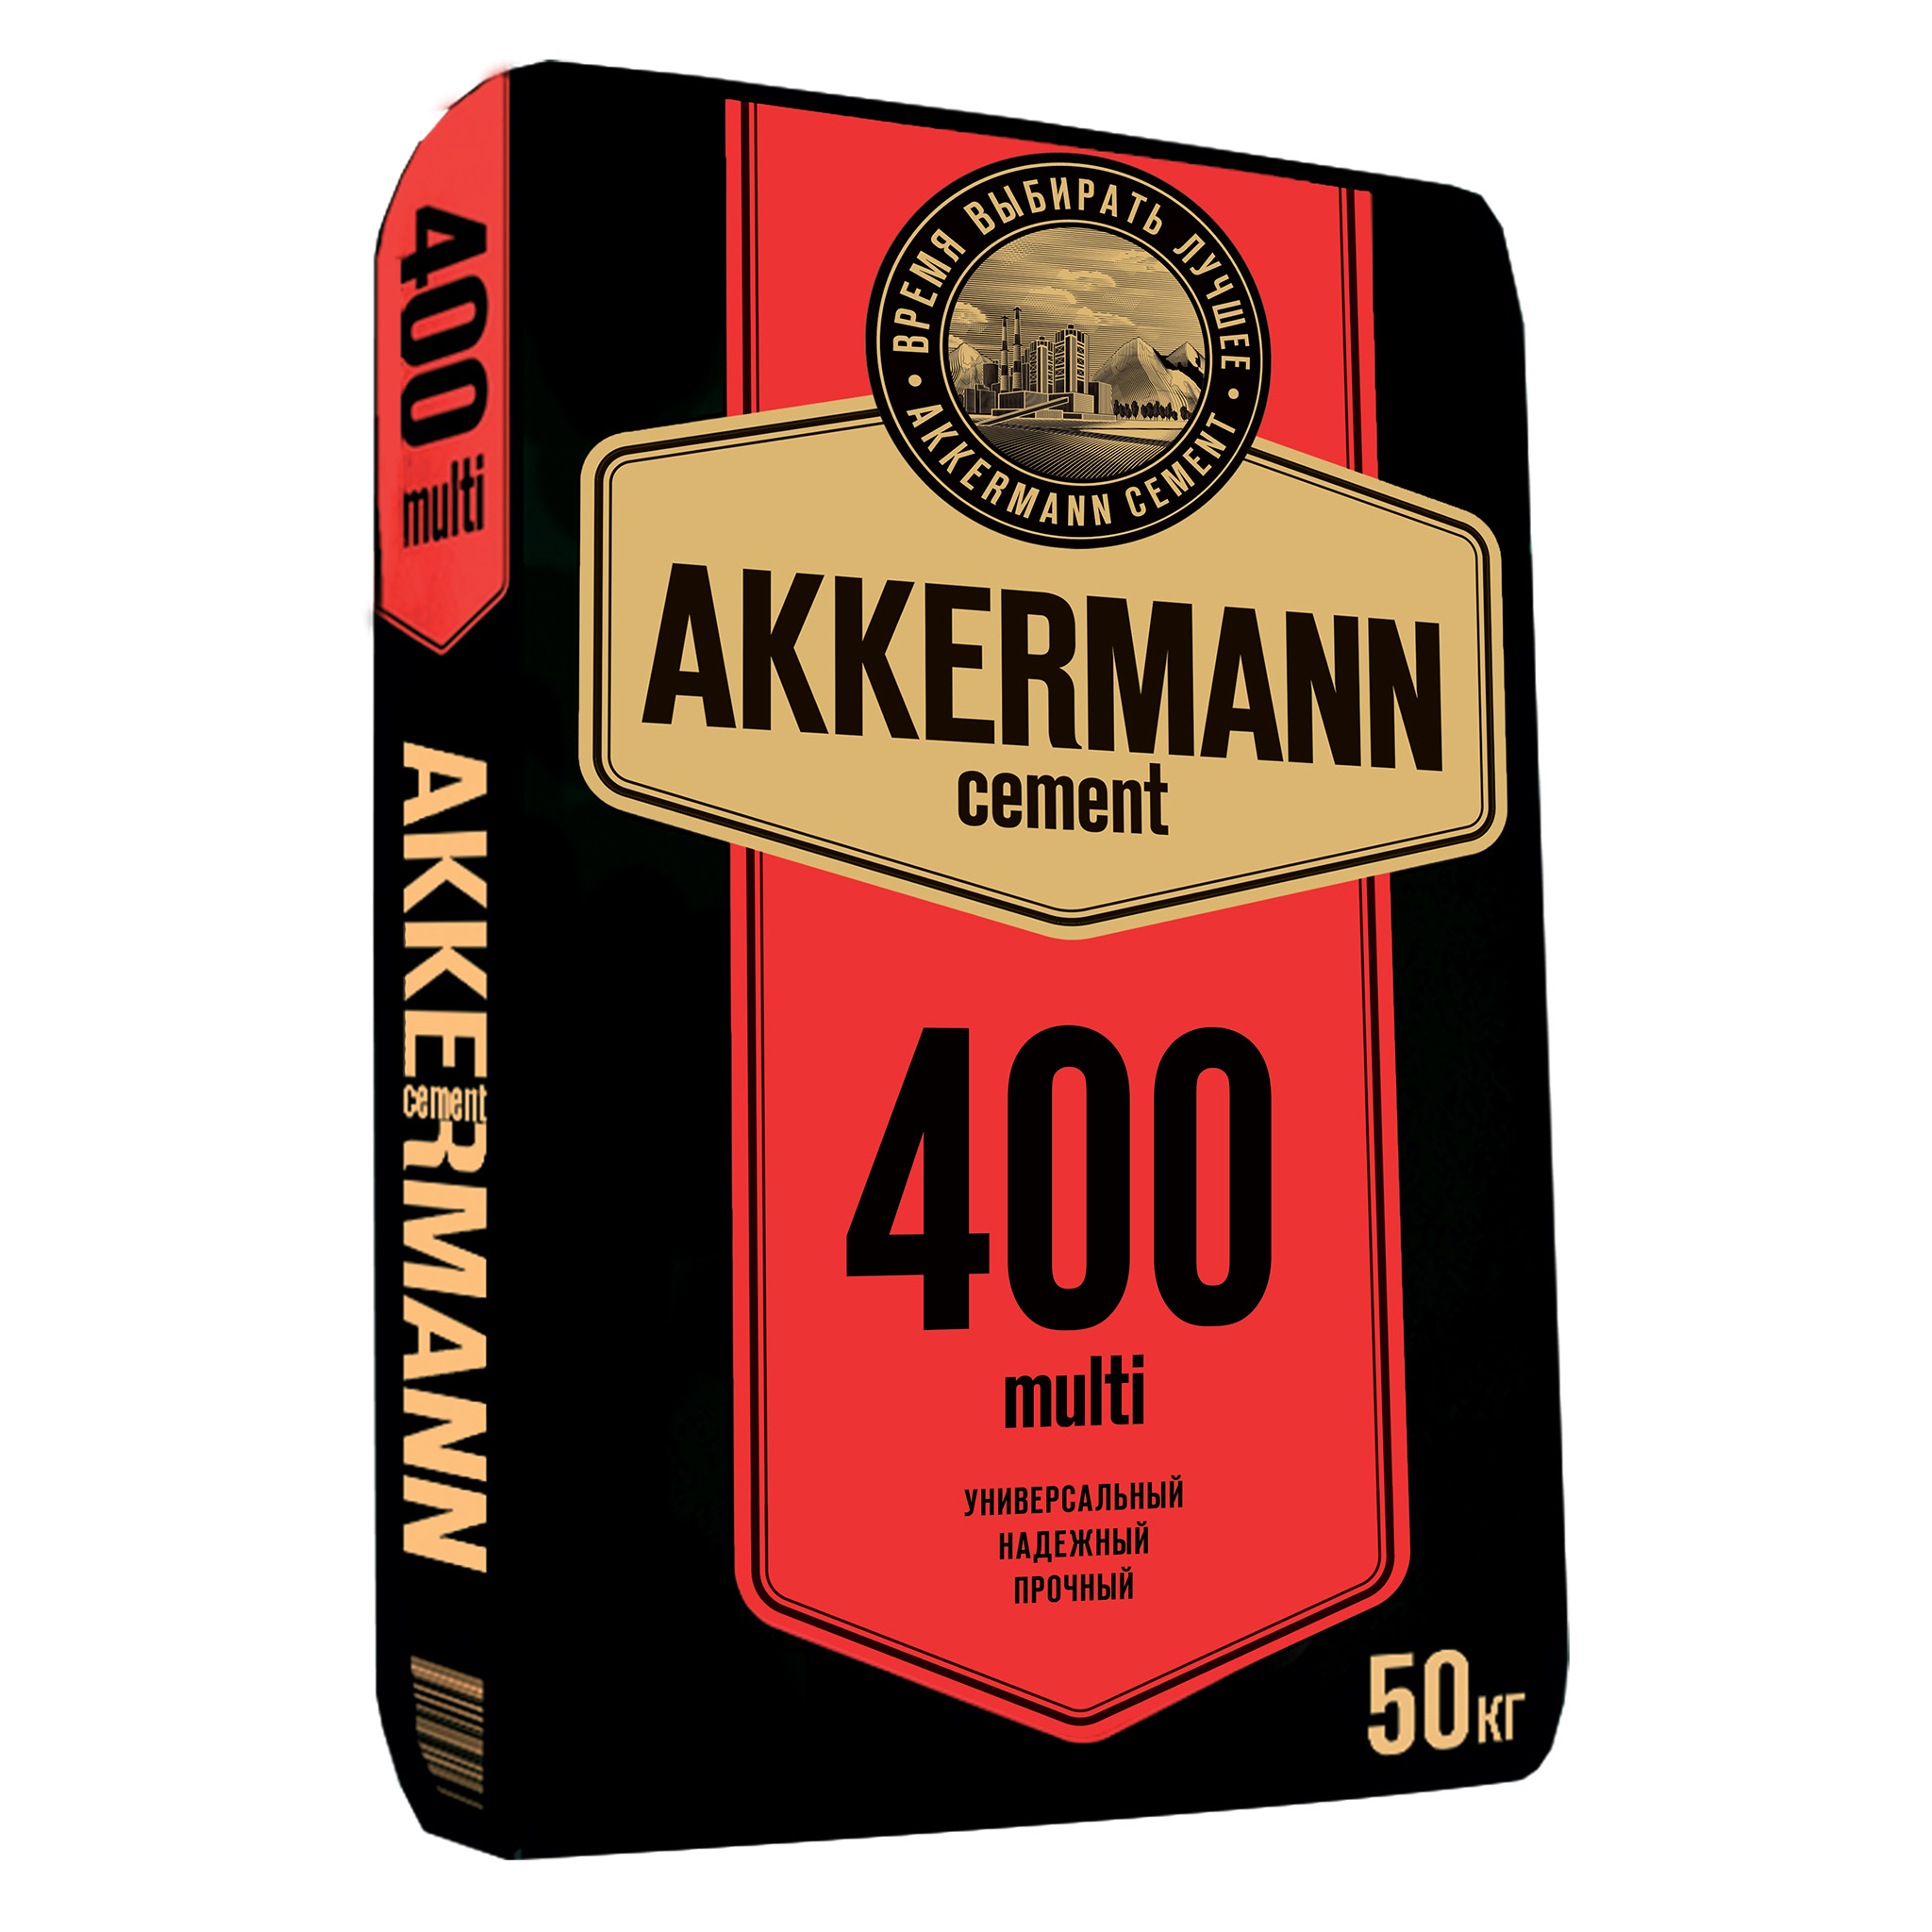 50 кг 500 г. Цемент Akkermann 400. Цемент ЮУГПК Akkermann 500. Цемент Akkermann м500 (мешки 50 кг) 30 шт/под. Цемент Akkermann мешок.